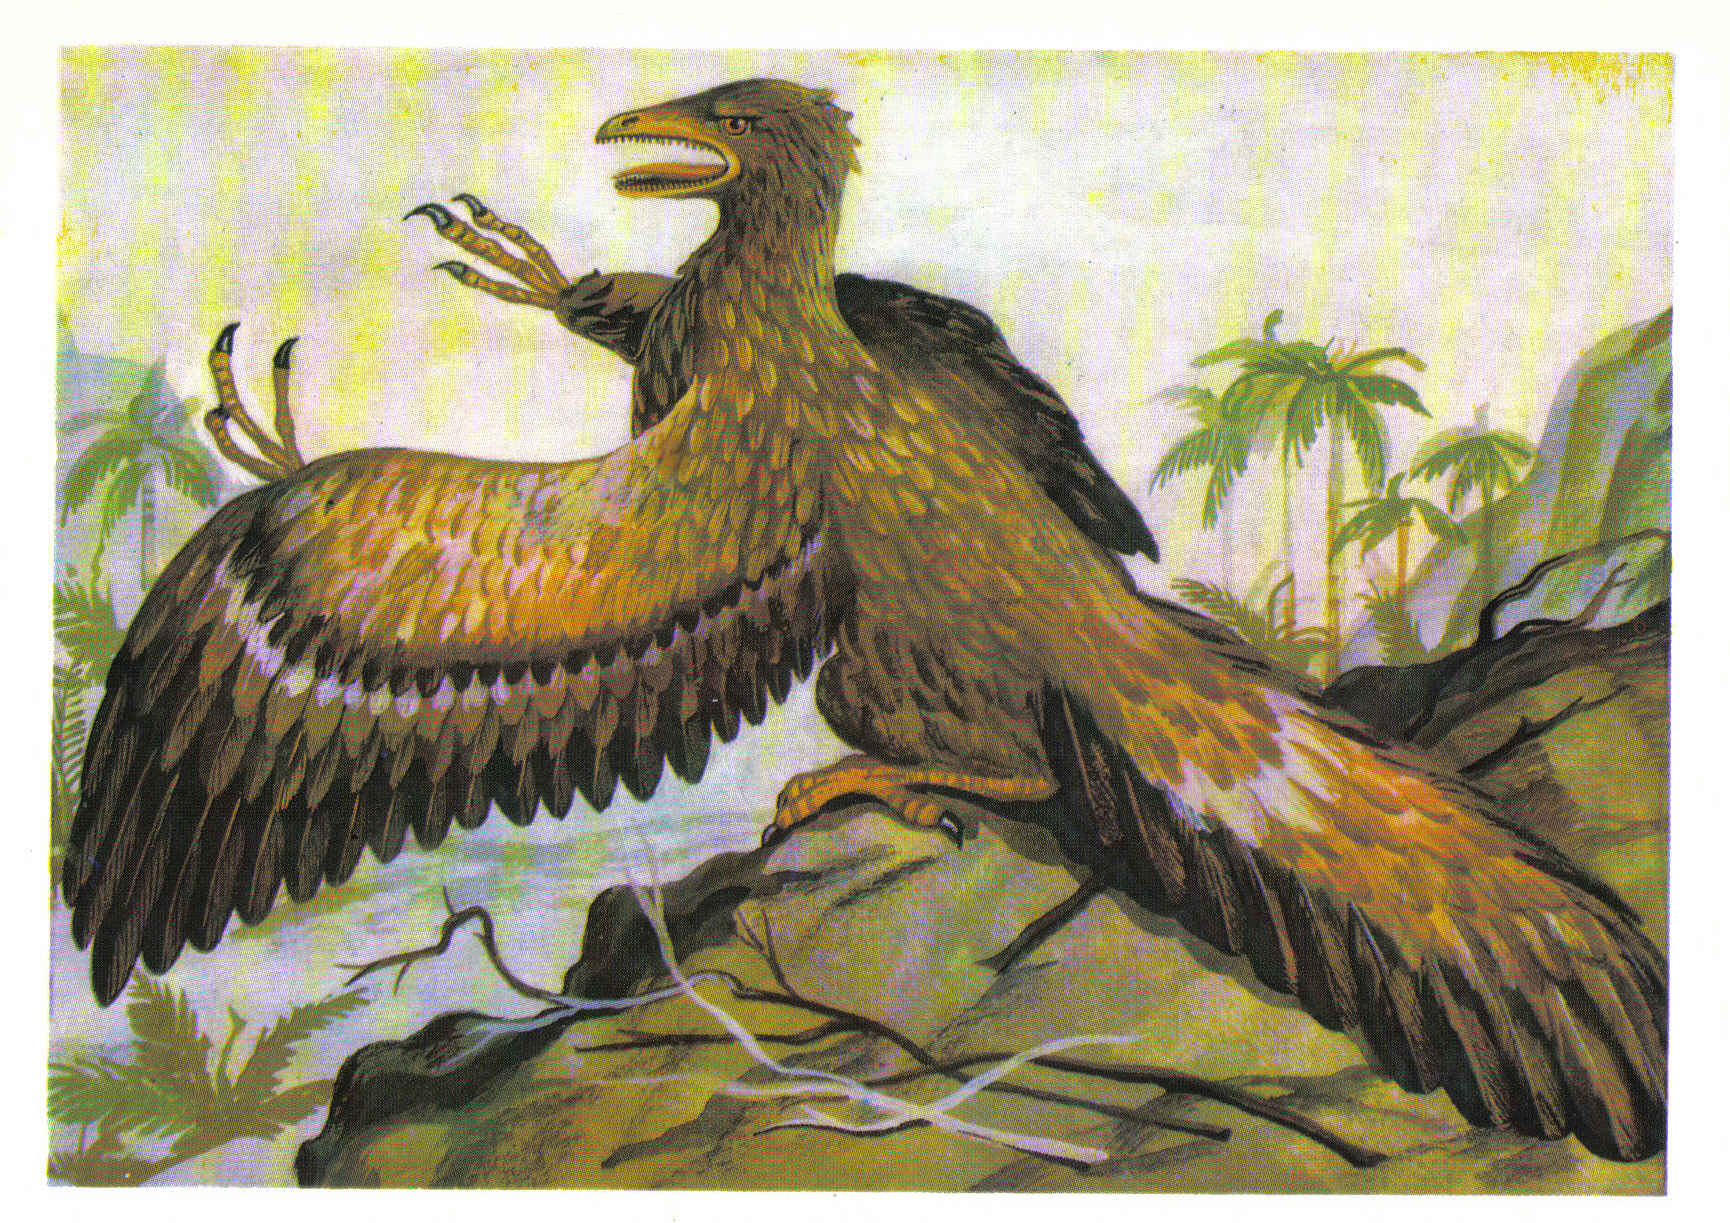 Old bird. Археоптерикс Эра. Древняя птица Археоптерикс. Предок птиц Археоптерикс. Археоптерикс Эра и период.